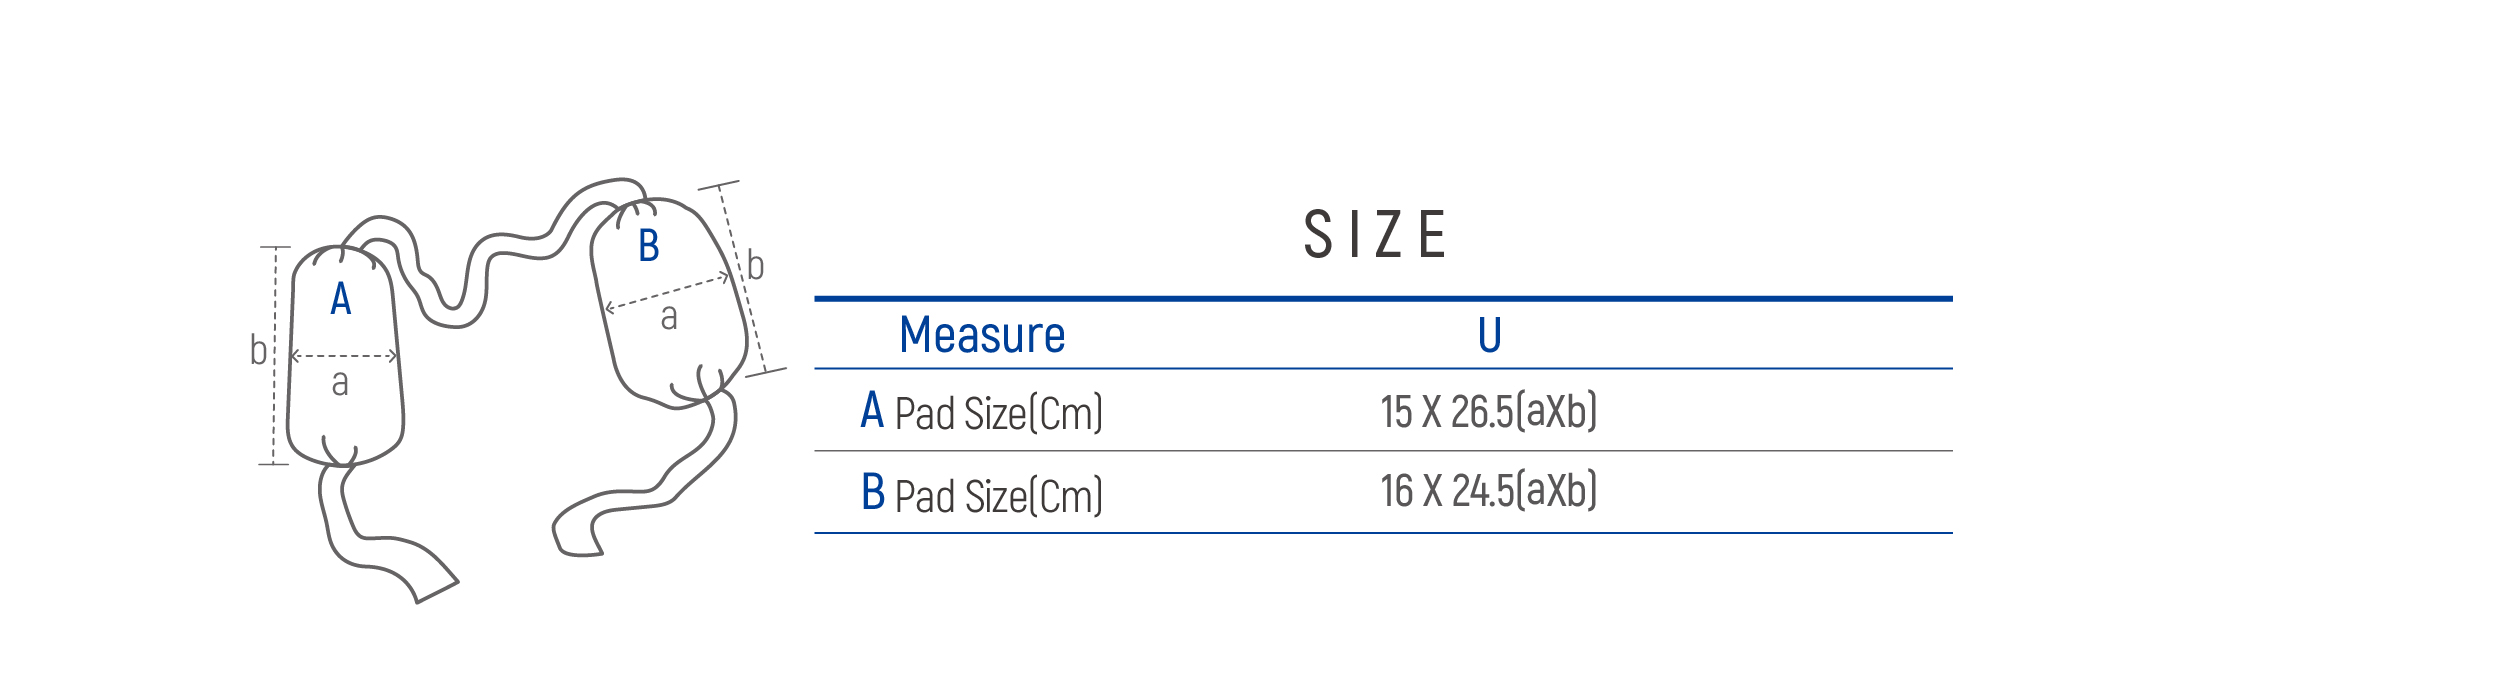 DR-E018 Size table image